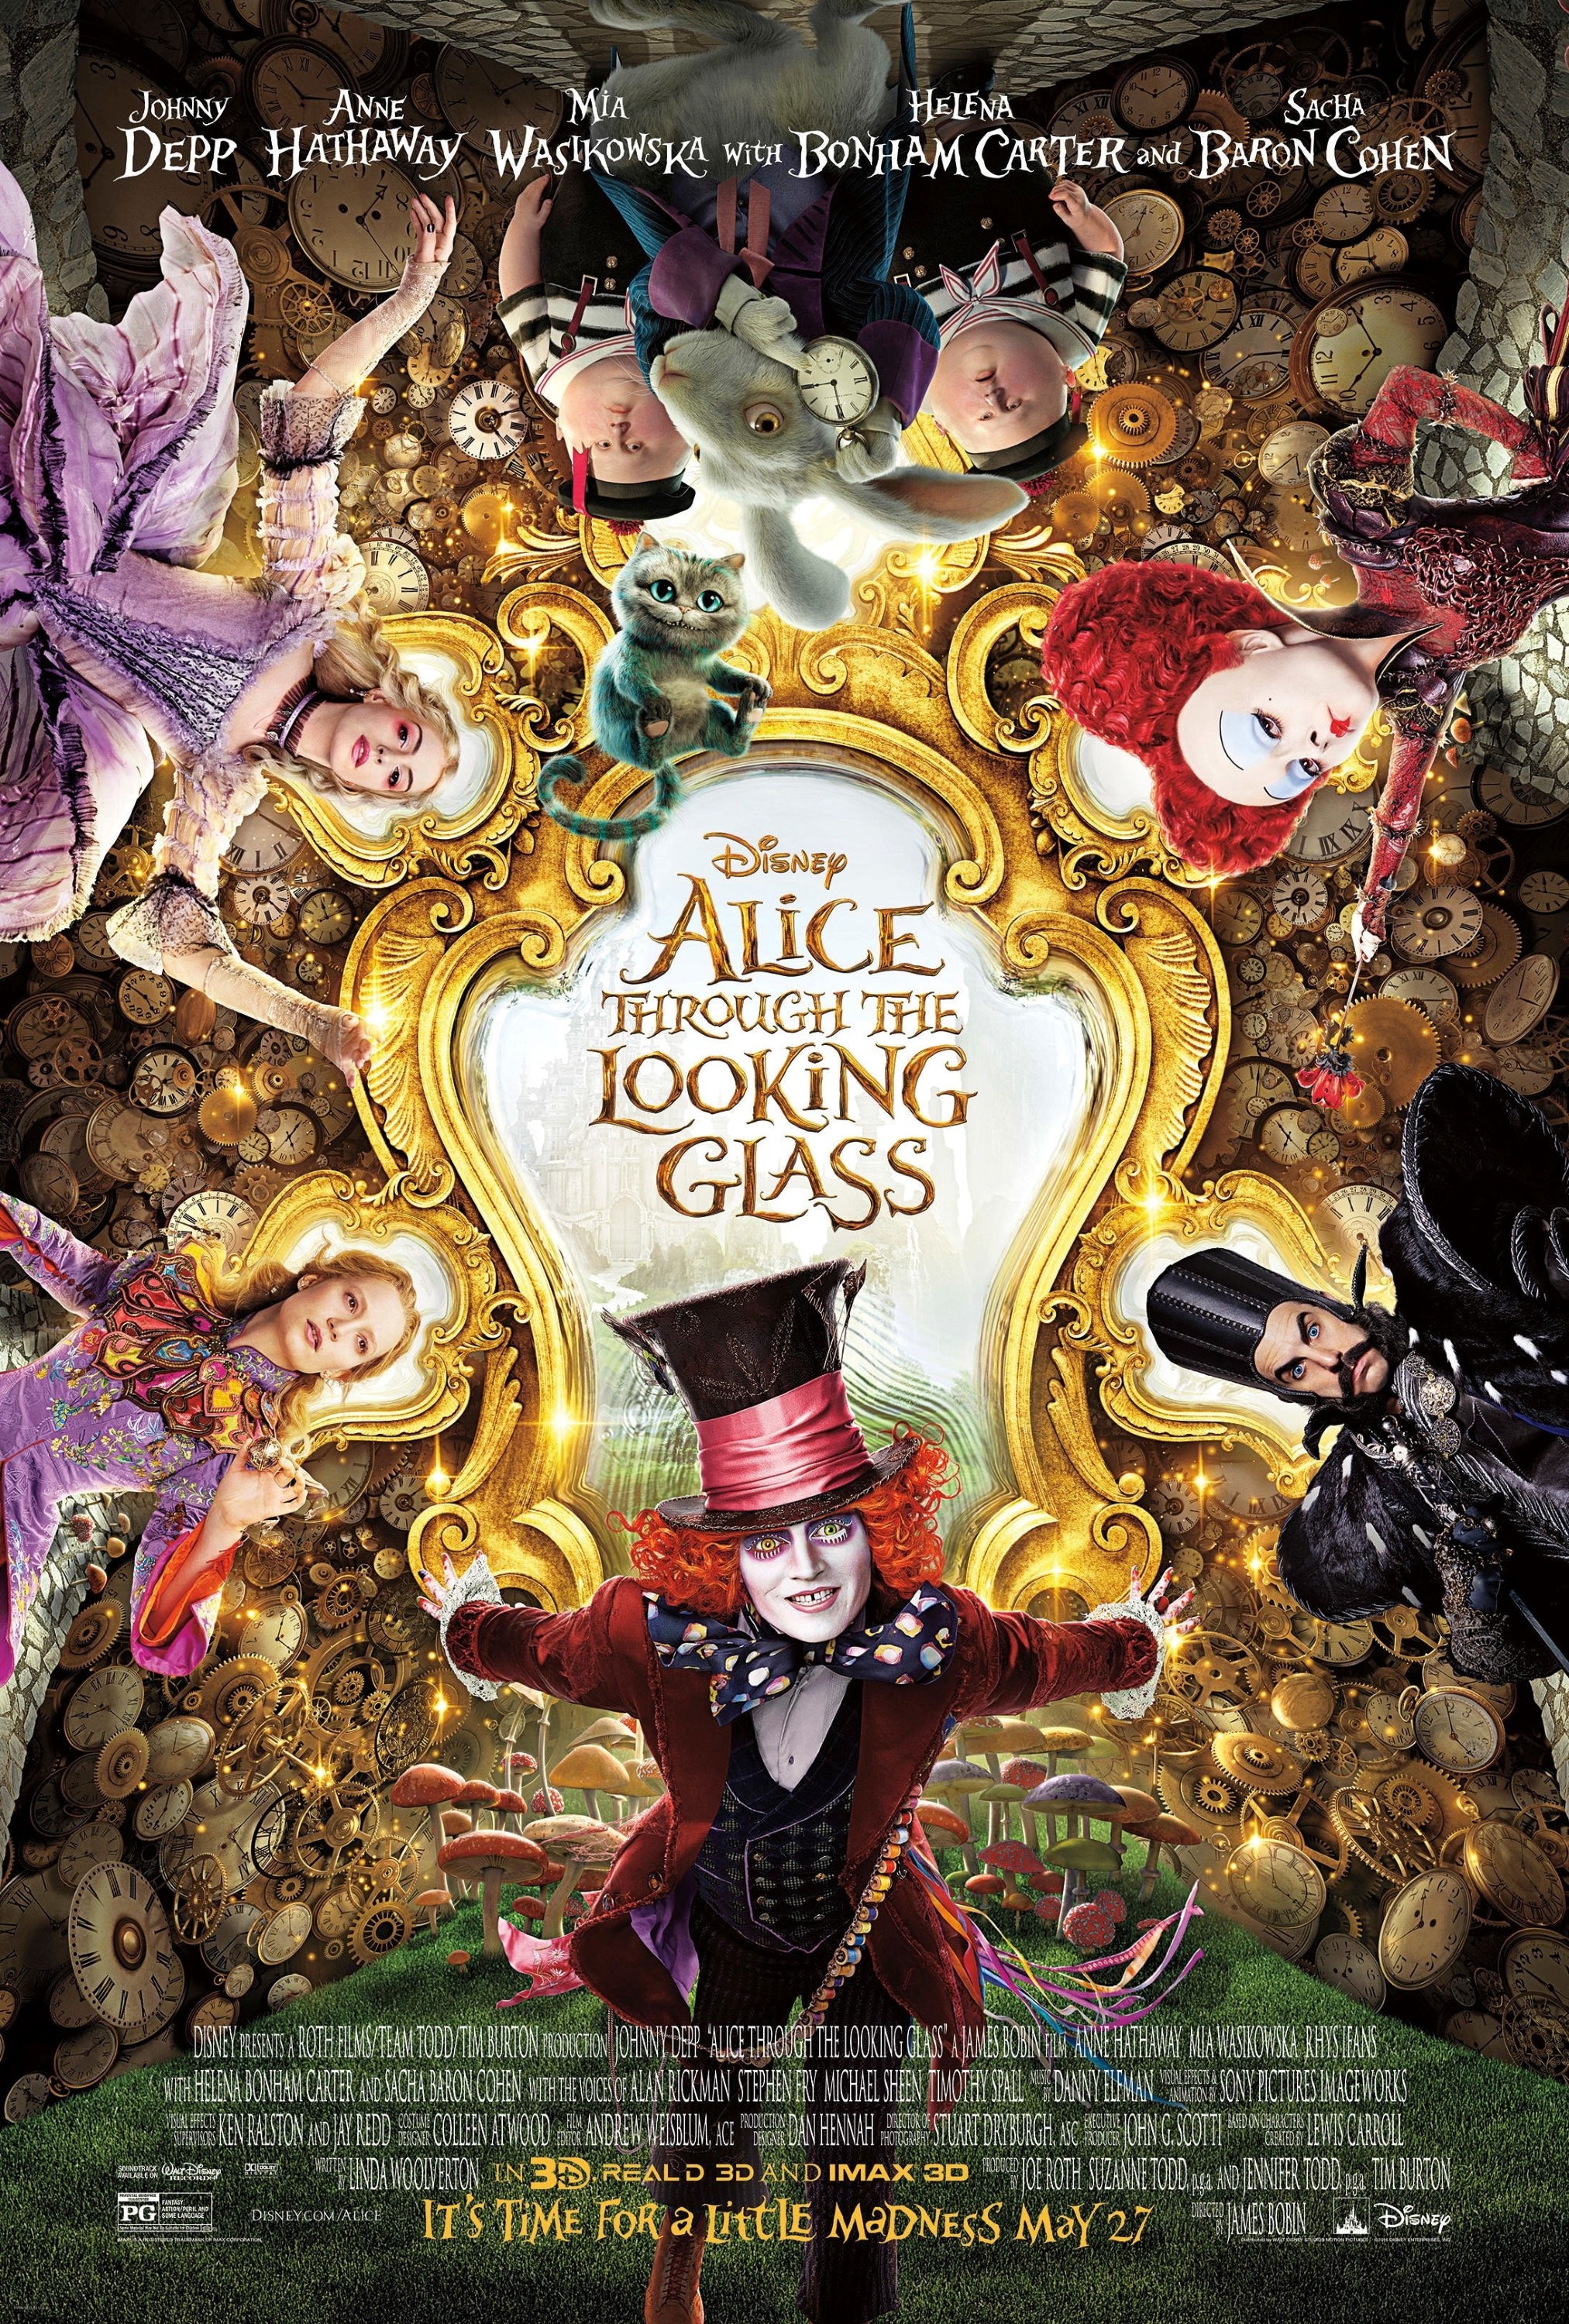 Alice in Wonderland (2010 video game) - Wikipedia